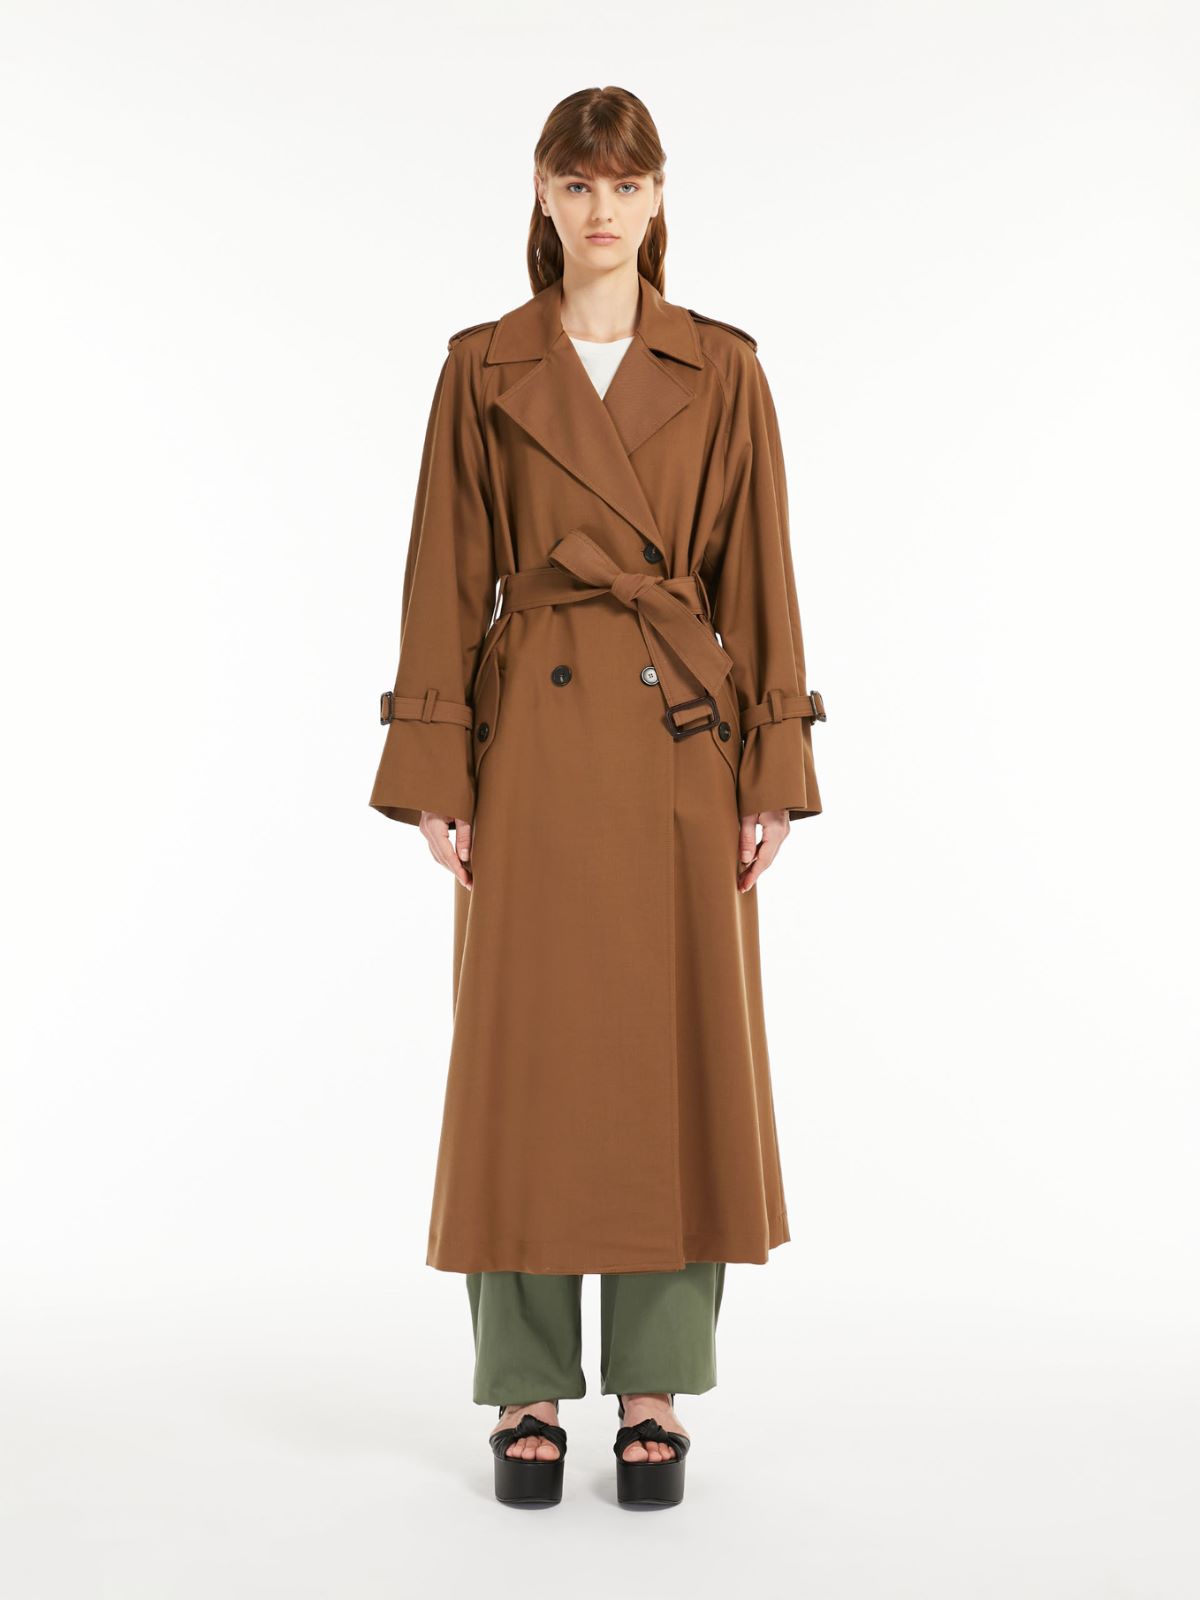 Belted trench coat in showerproof fabric - TOBACCO - Weekend Max Mara - 2